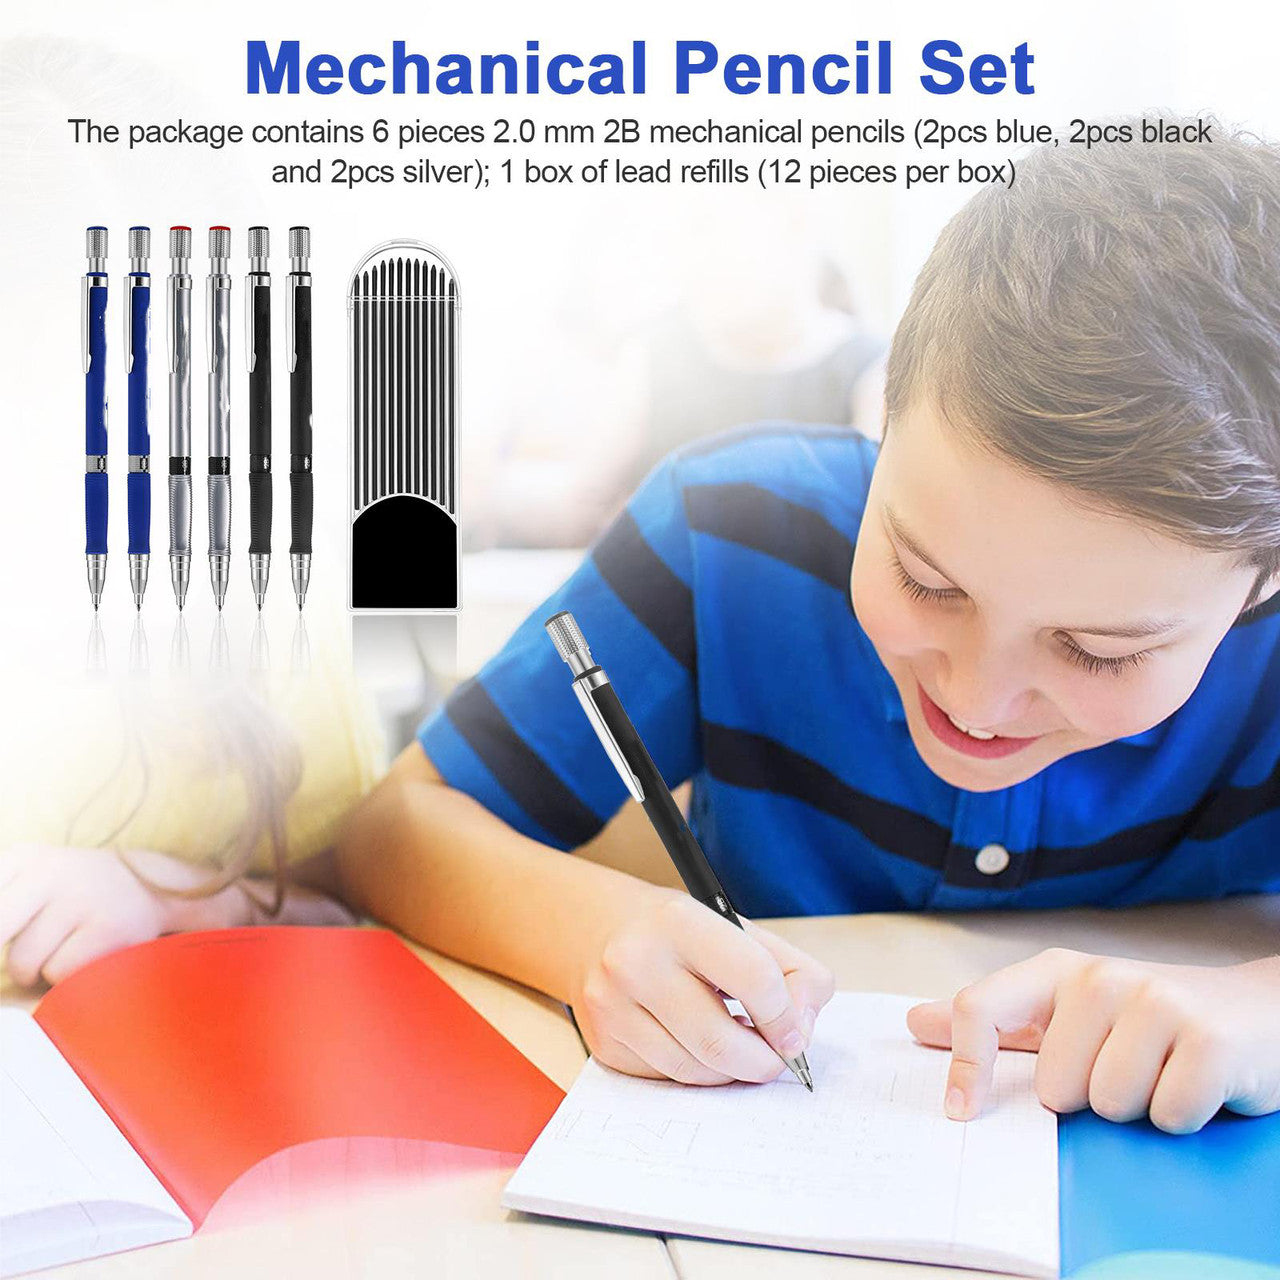 6 Pcs Mechanical Drafting Clutch Pencil - 2.0mm Mechanical Pencil Set,for Art Sketching Carpenter Draft Drawing Writing Crafting